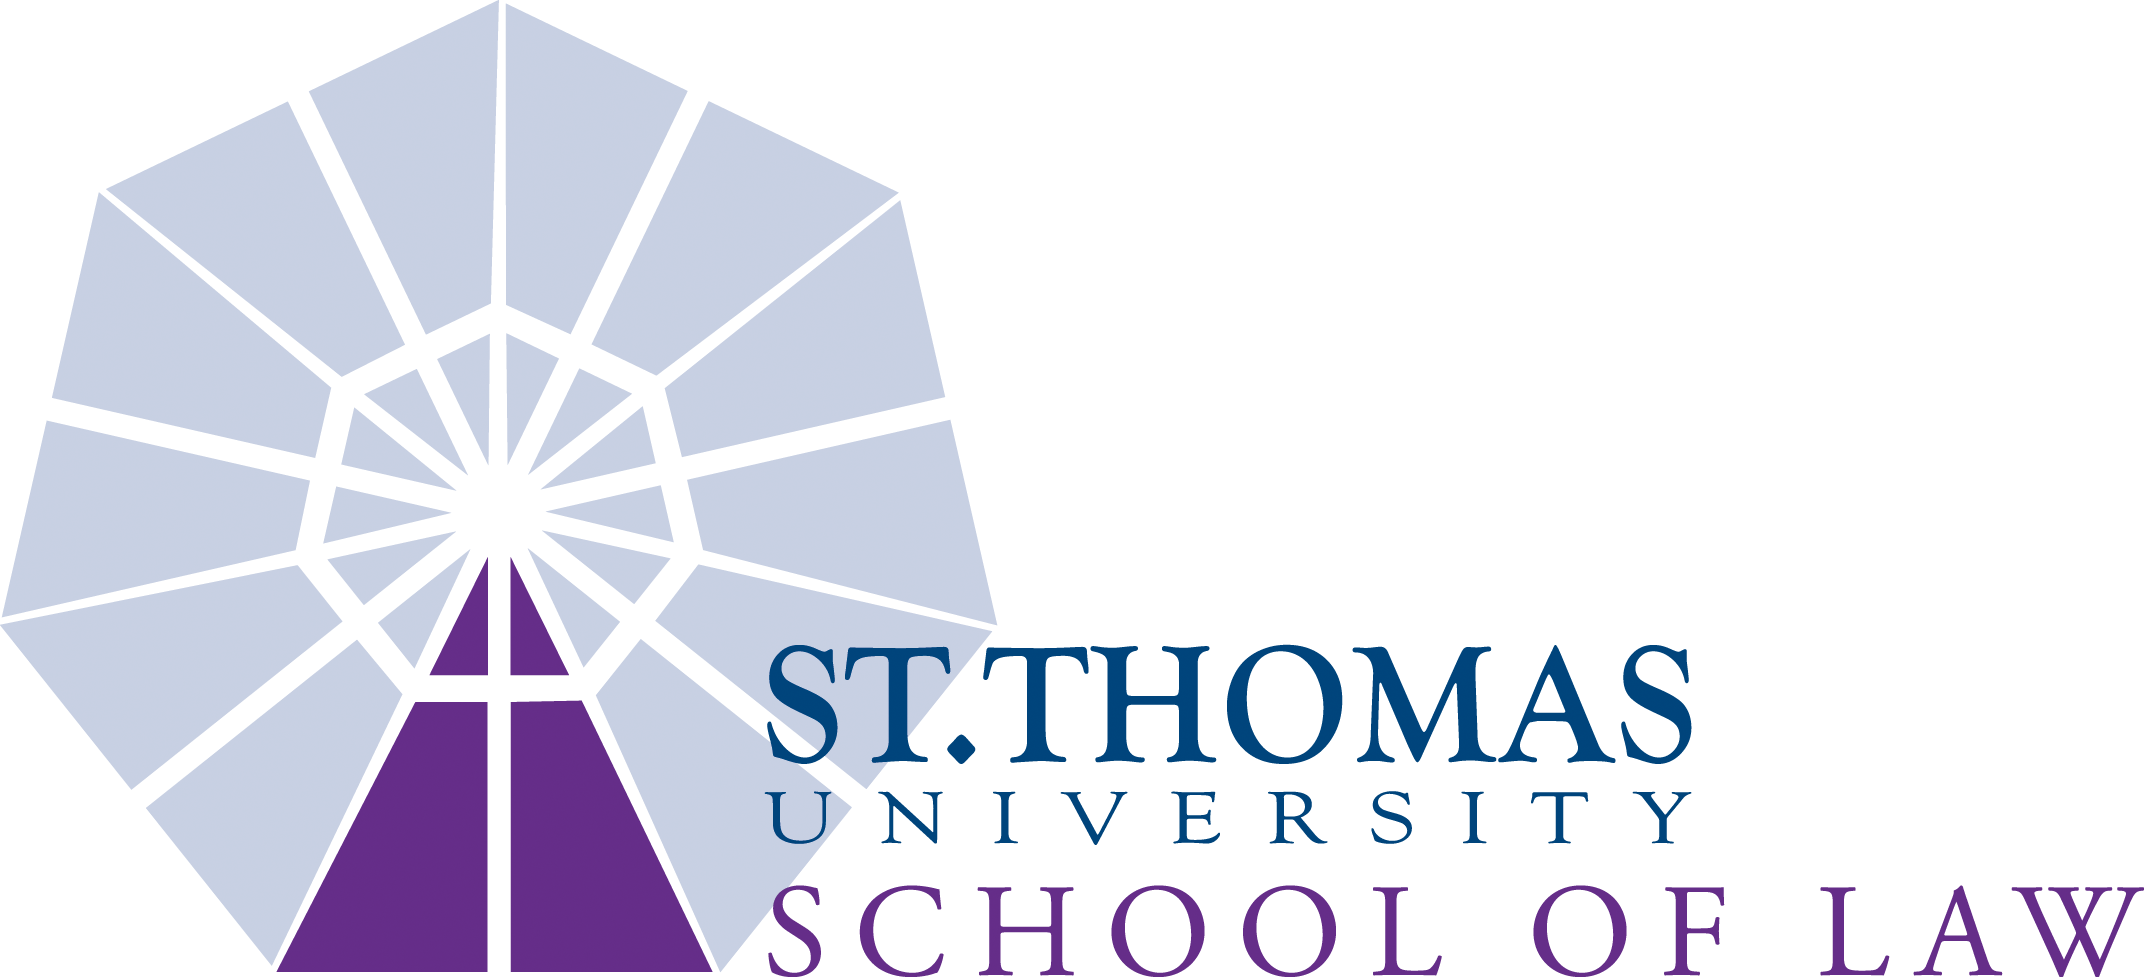 St. Thomas University seal